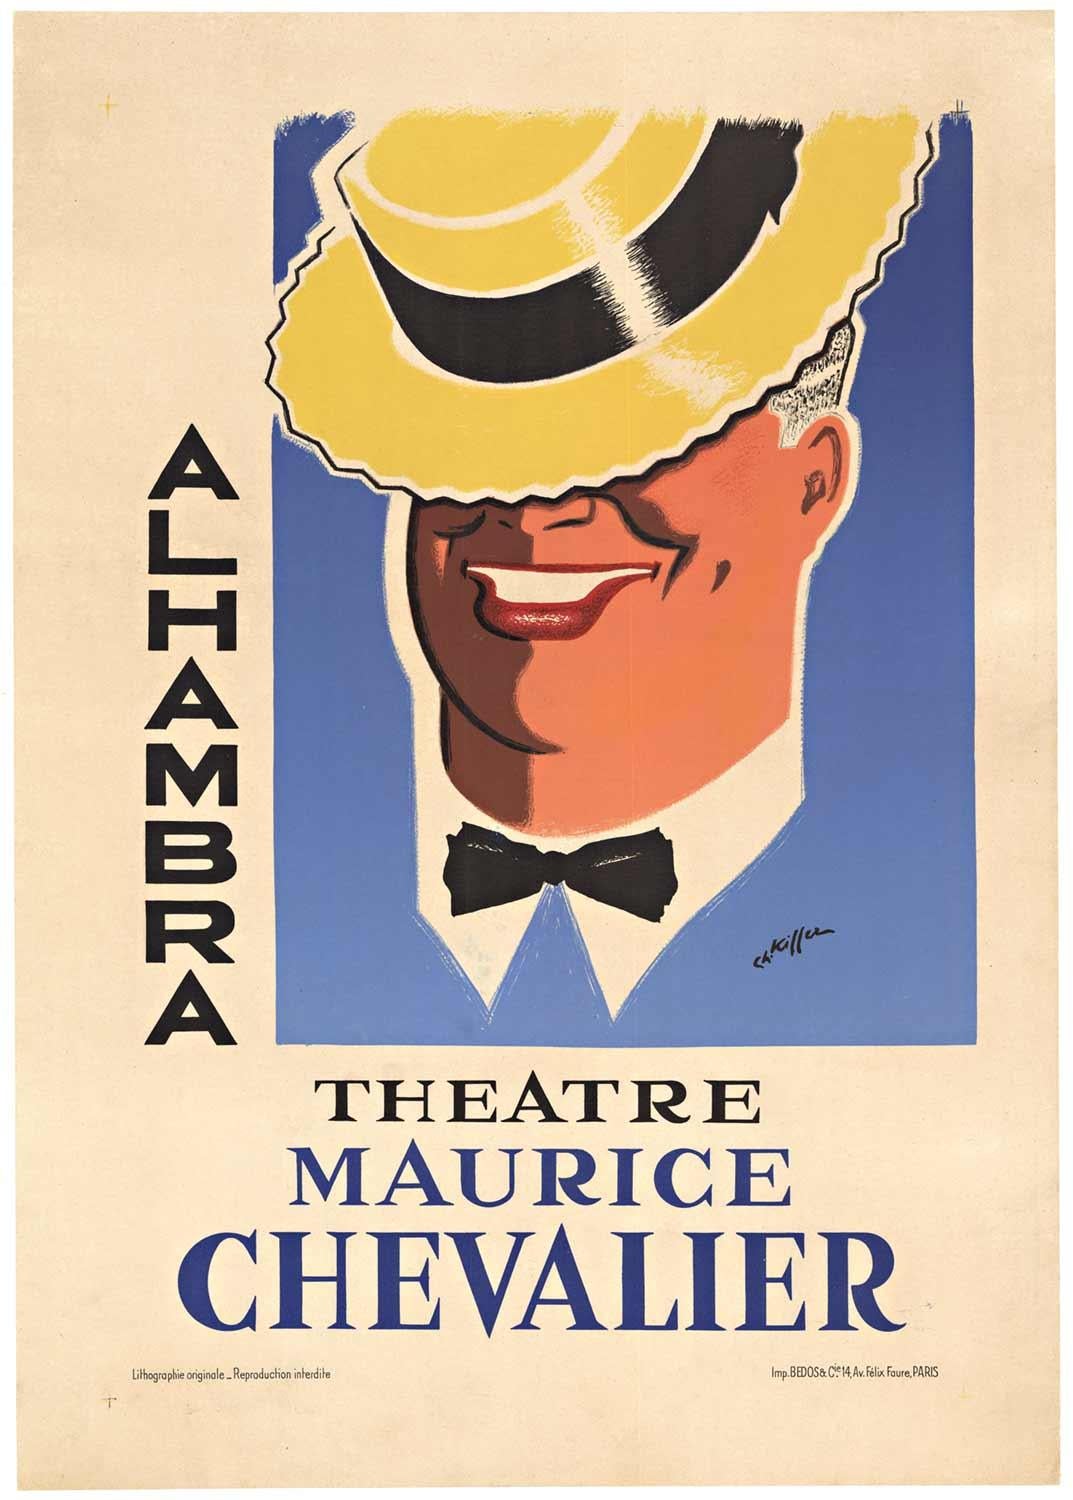 Charles Kiffer Print - Original "Maurice Chevalier, Alhambra Theatre" vintage poster  medium size